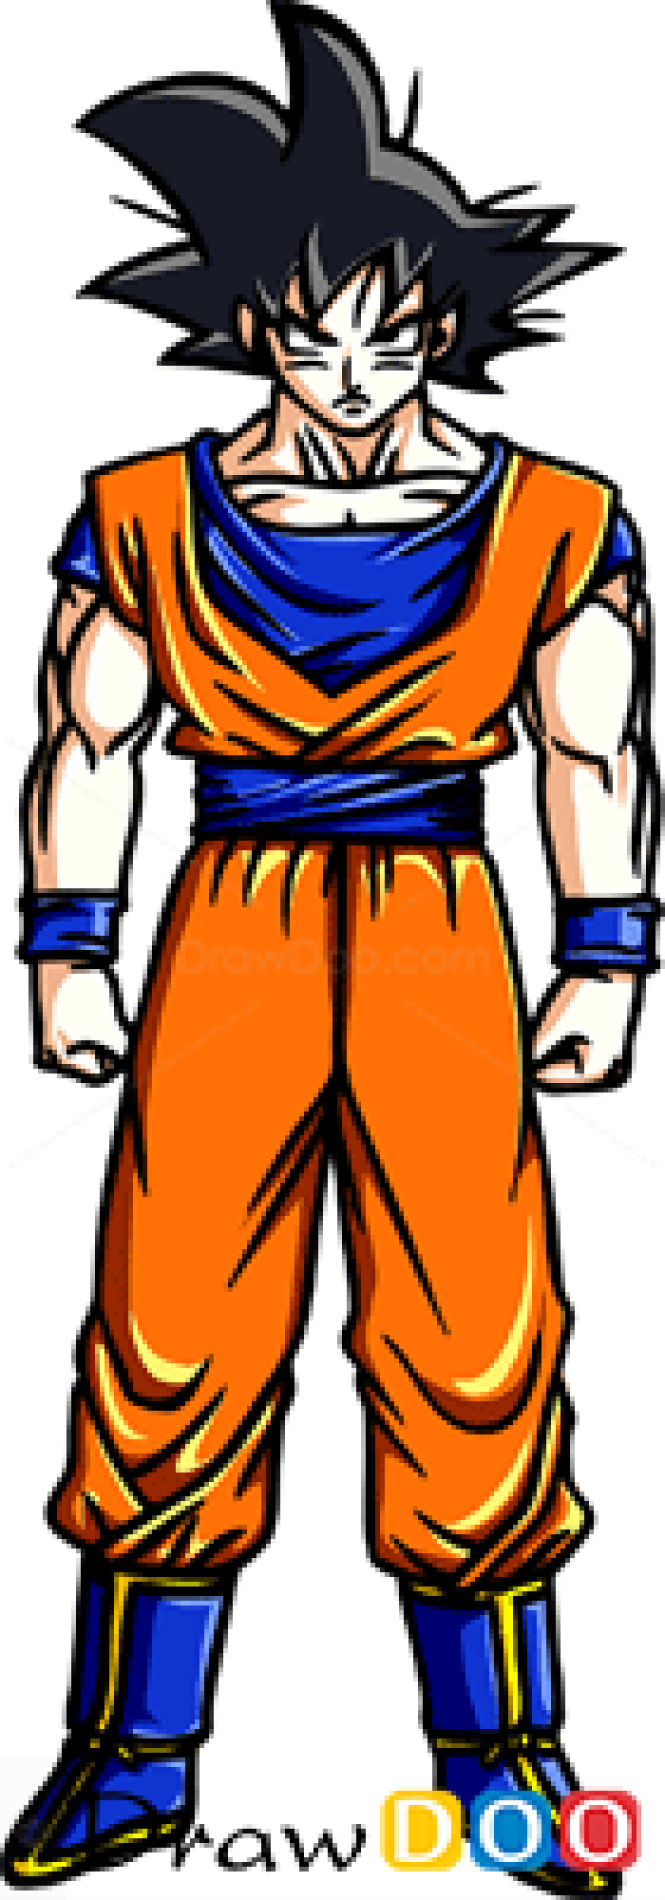 How to Draw Goku, Cartoon Characters